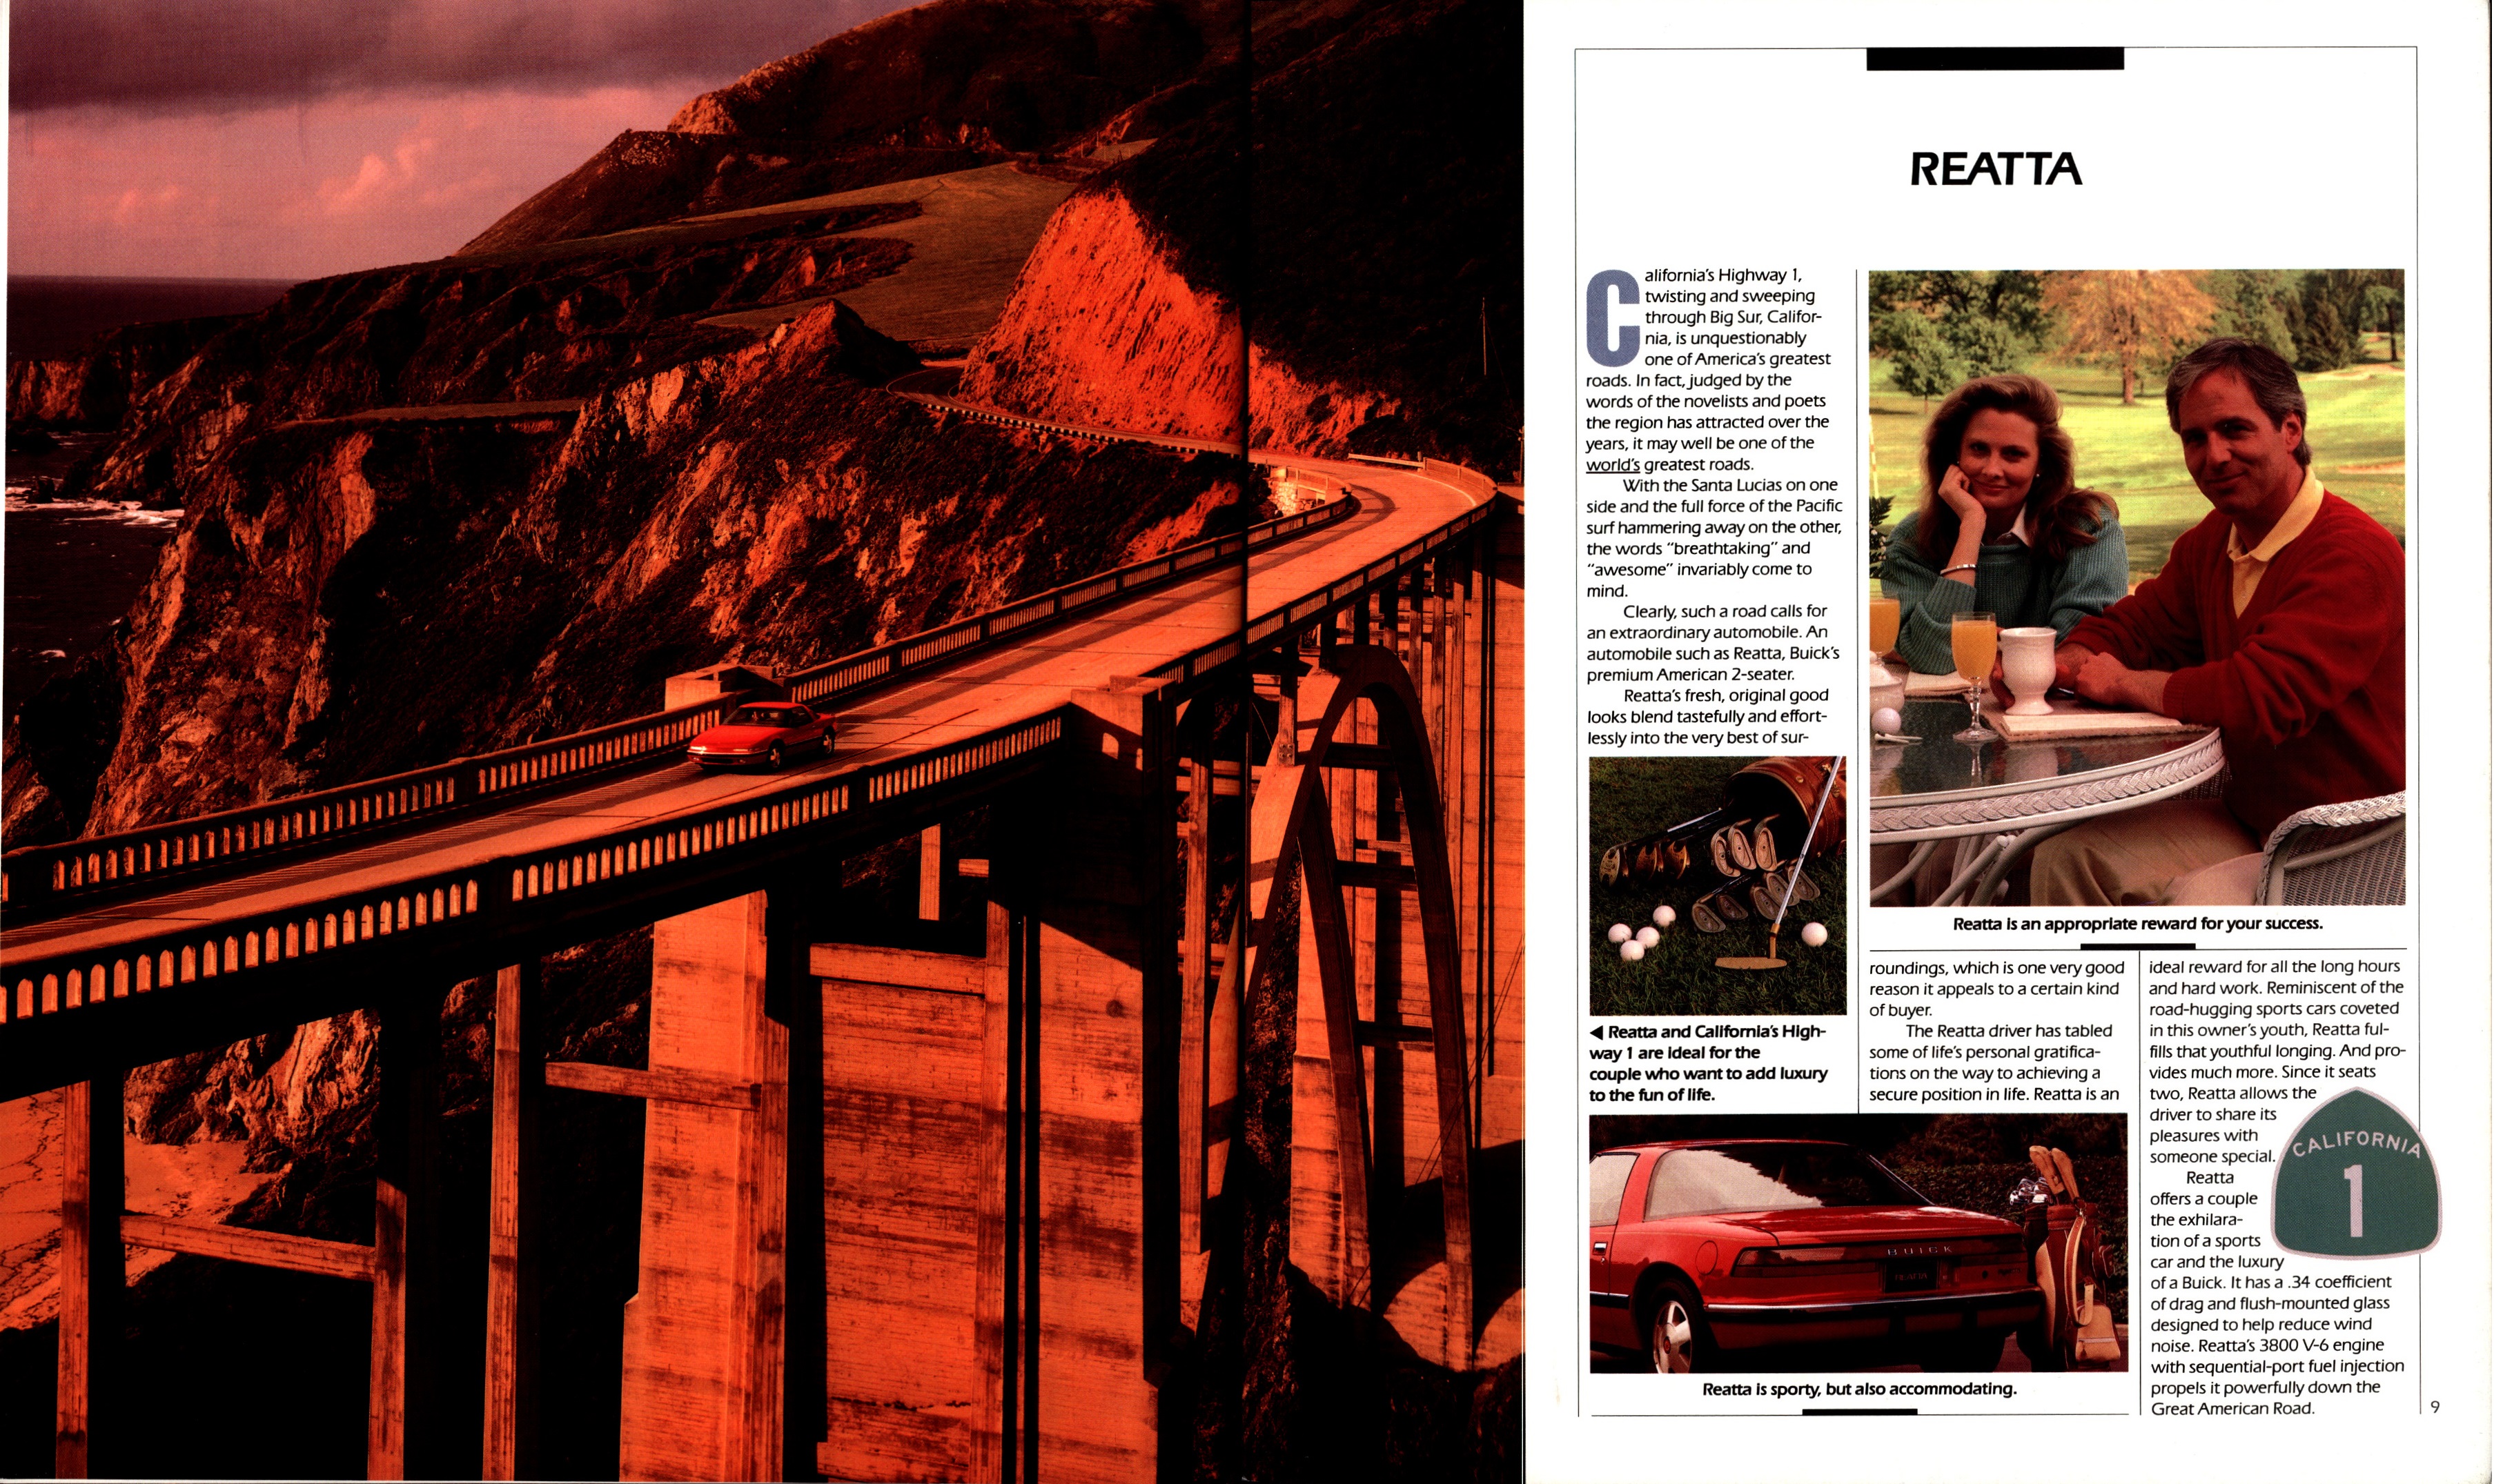 1989 Buick Full Line Prestige  Brochure 08-09